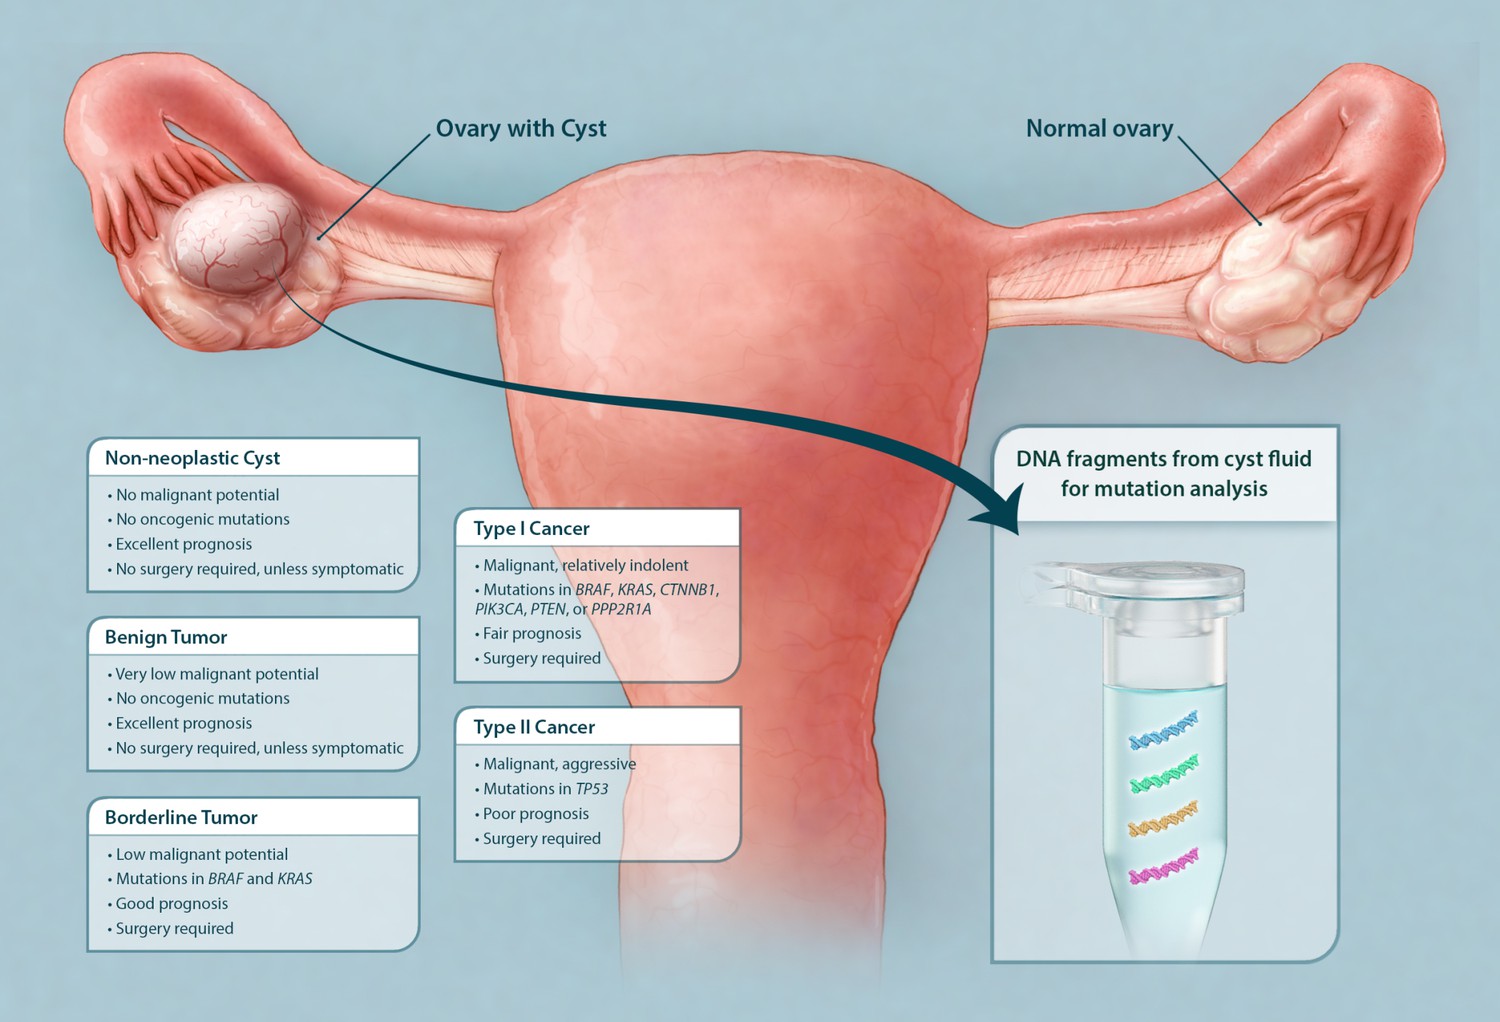 Ovarian cancer or cysts, Ovarian cancer pregnancy